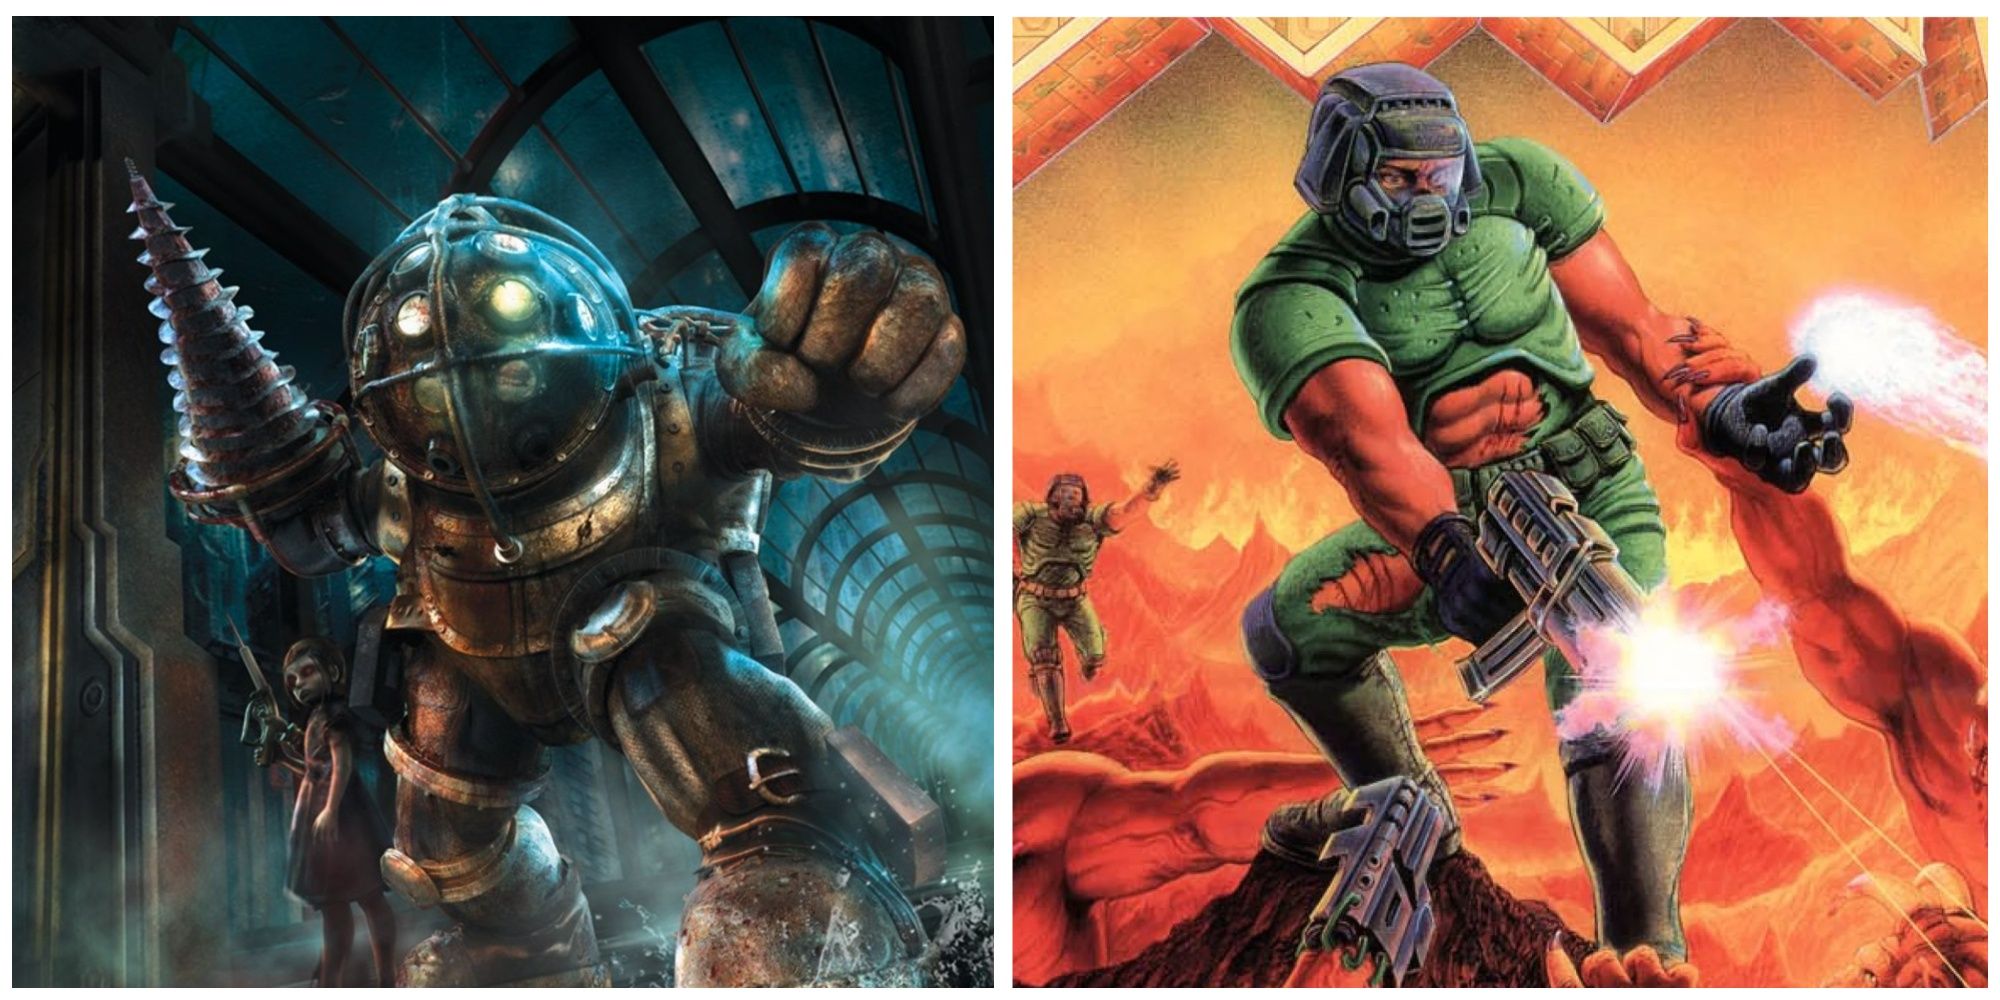 (Left) BioShock cover (Right) DOOM cover